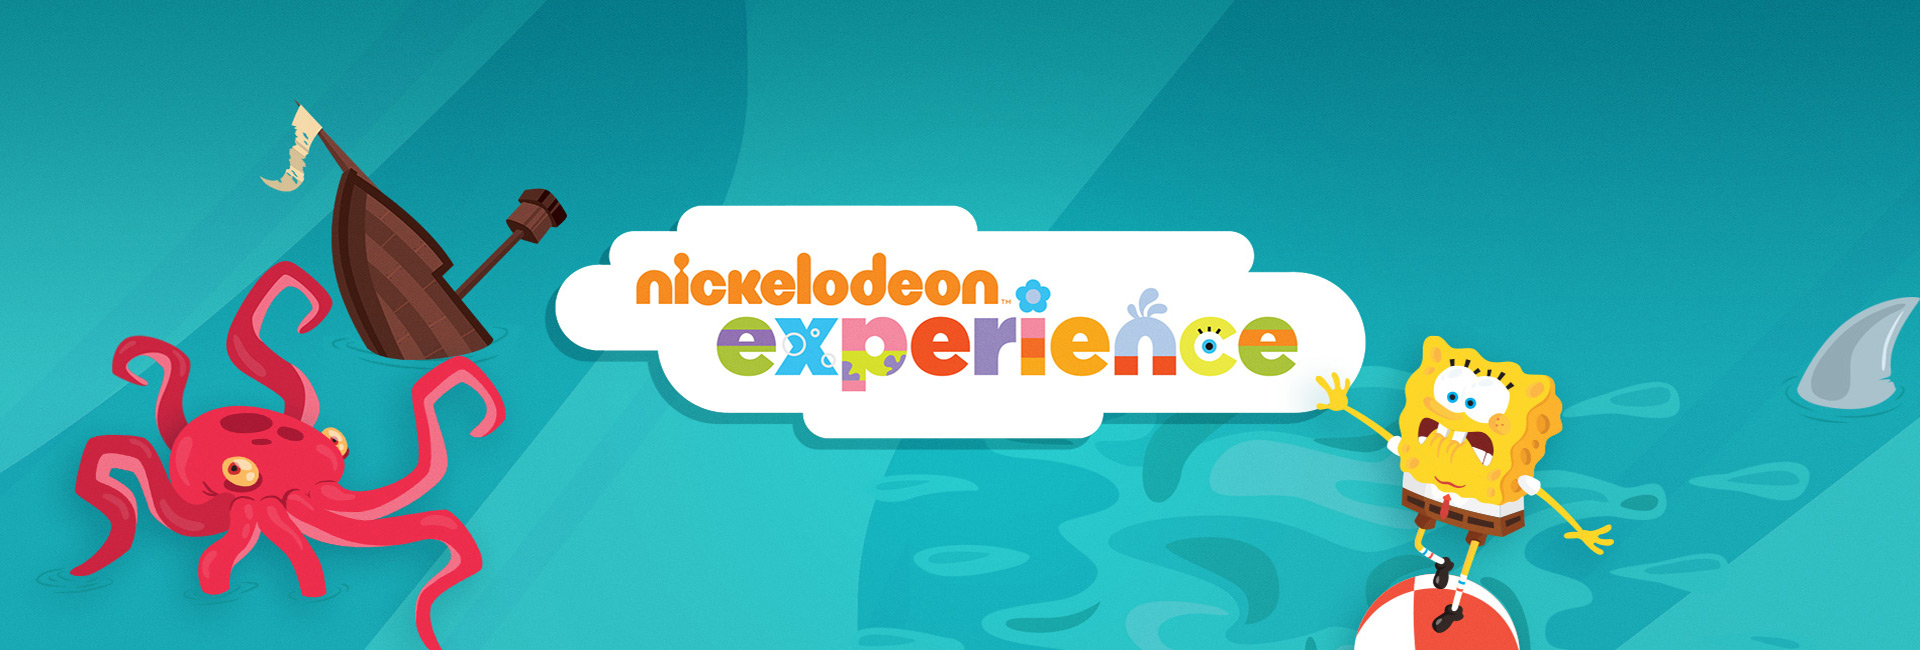 Nickelodeon Experience